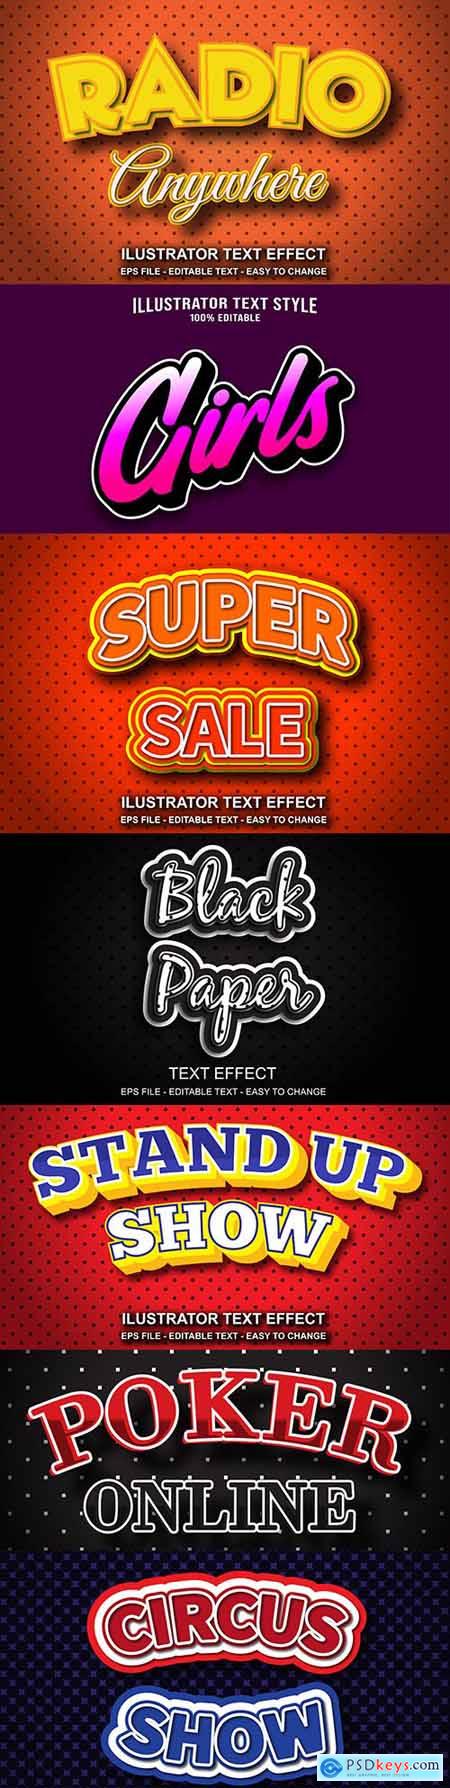 Editable font effect text collection illustration design 73